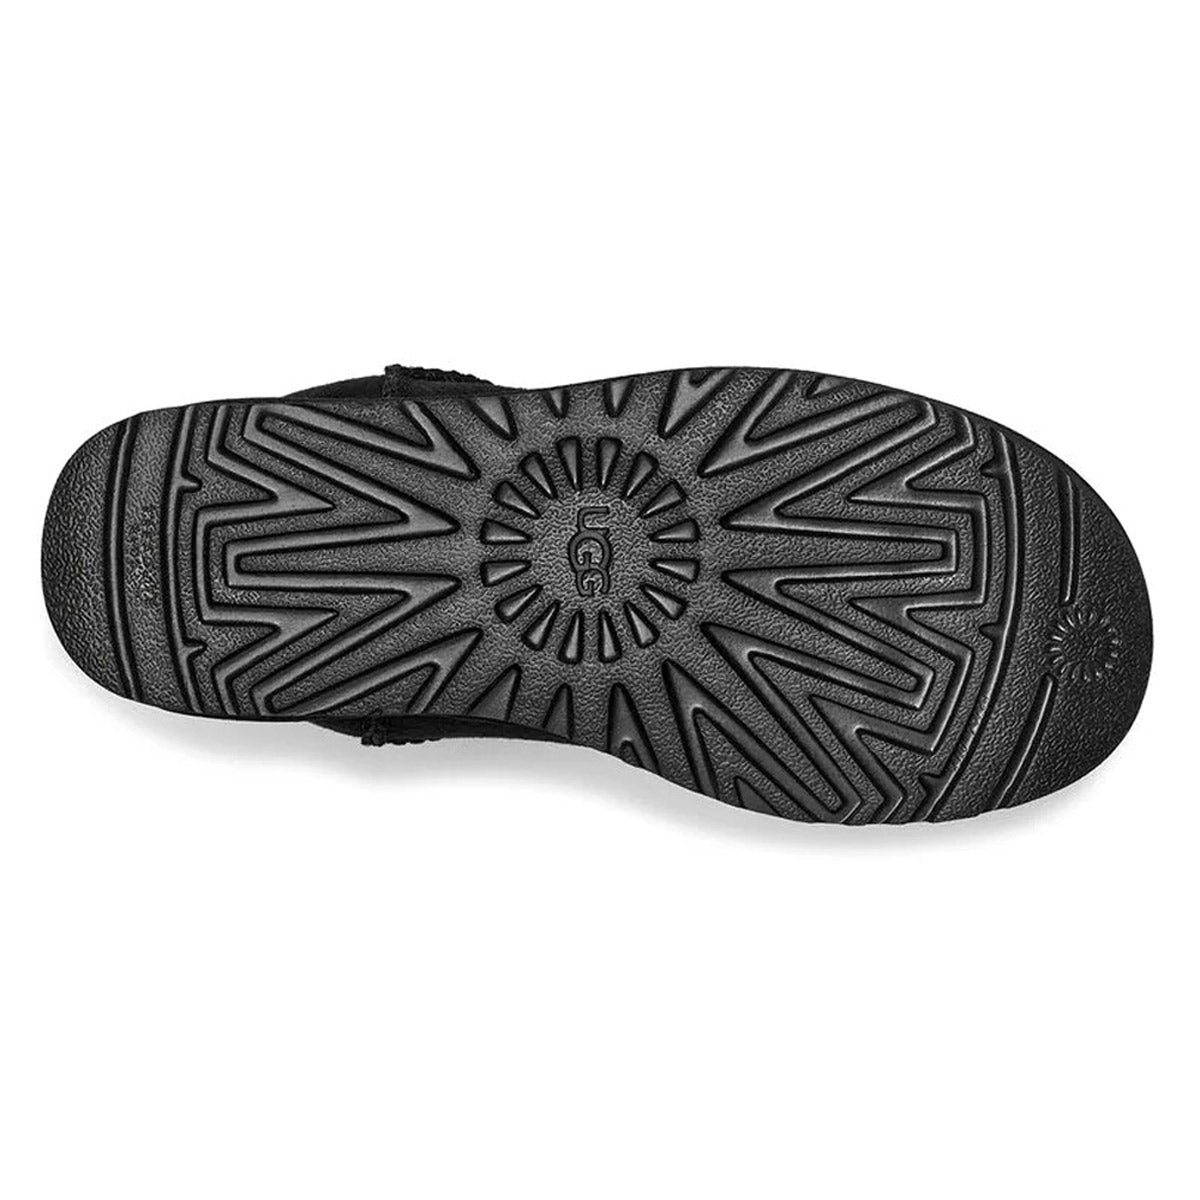 Tread pattern of a black UGG Classic Ultra Mini shoe sole with Ugg brand logo.